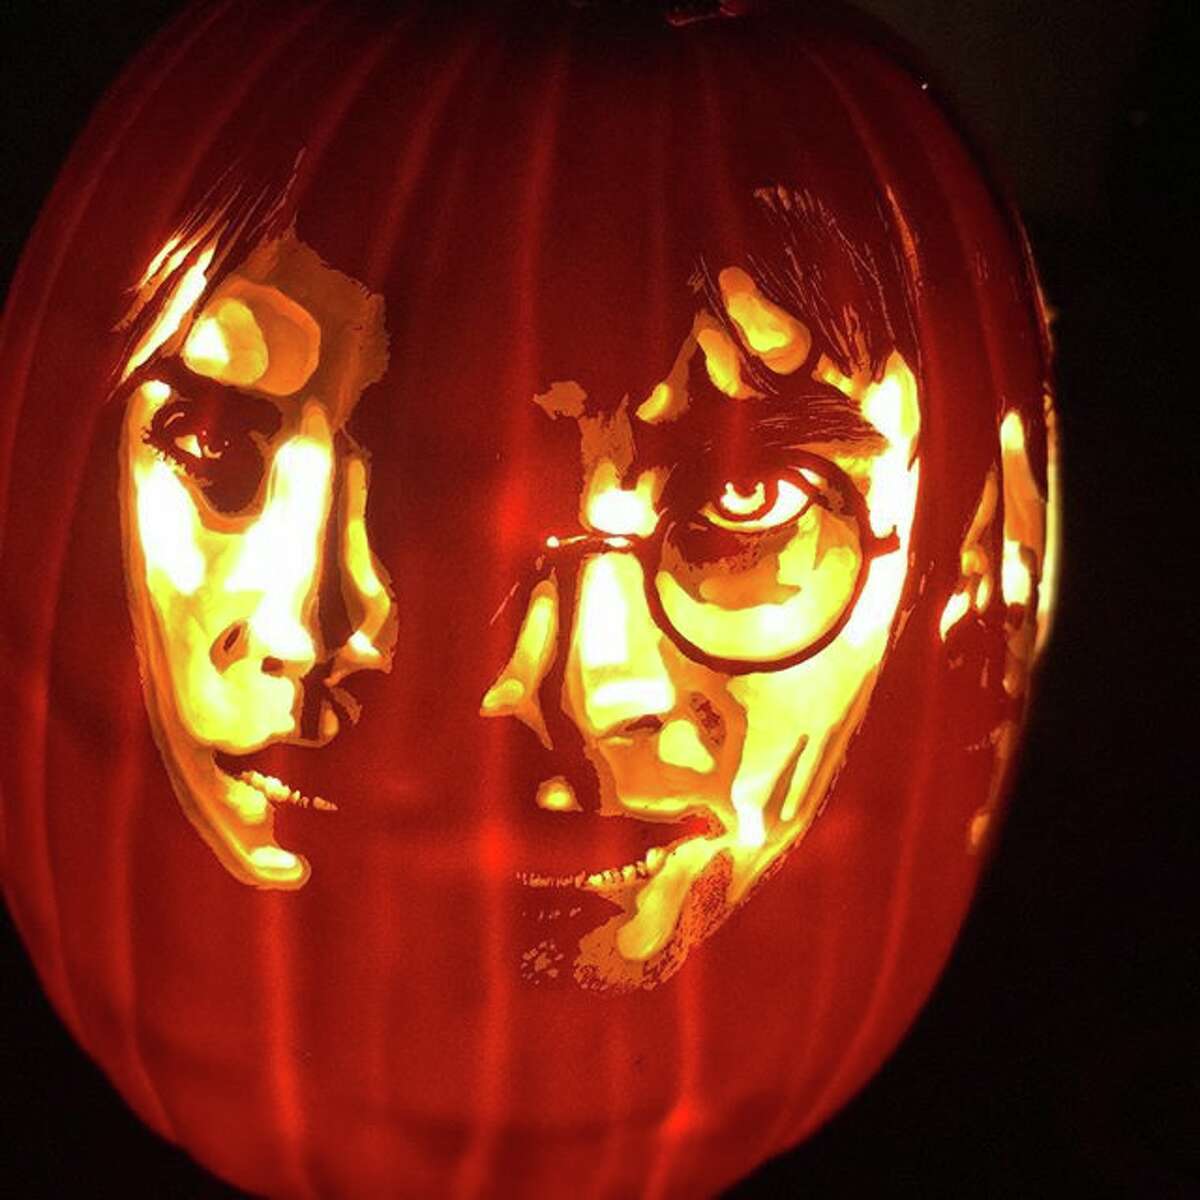 Pumpkin carver creates 'Nightmare Before Christmas', Harry Potter ...